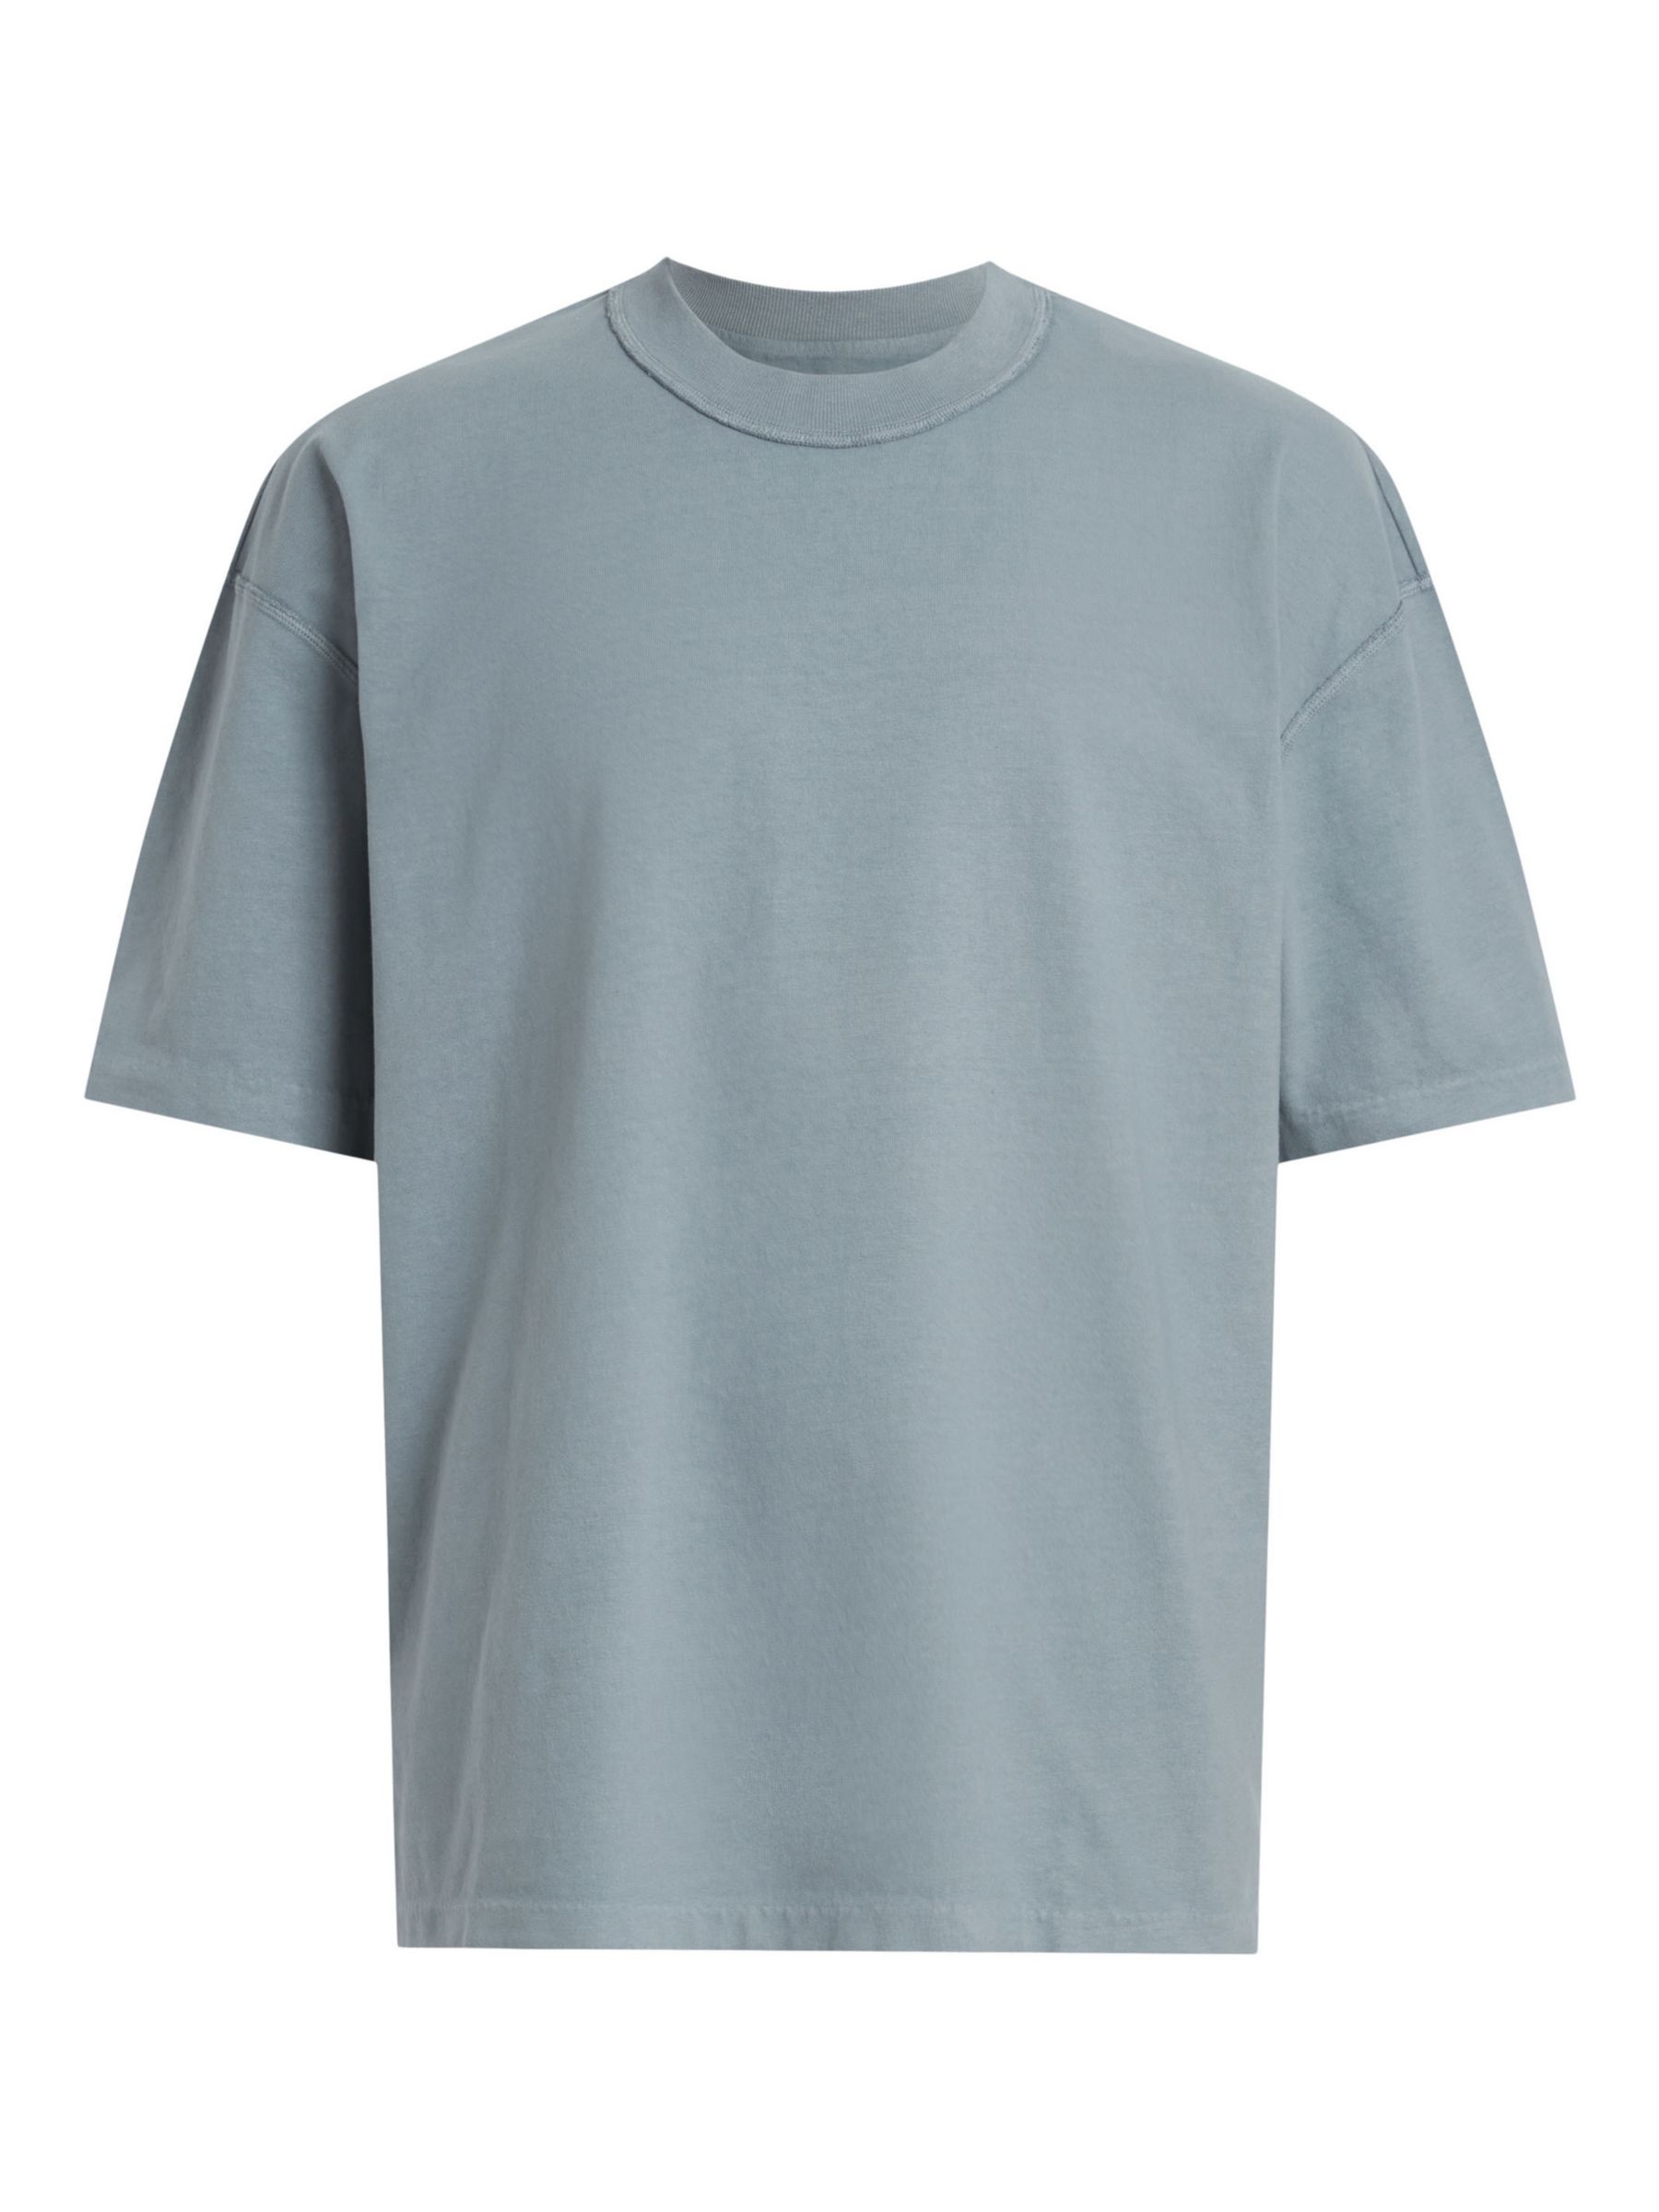 AllSaints Isac Short Sleeve Crew T-Shirt, Dusty Blue, XS